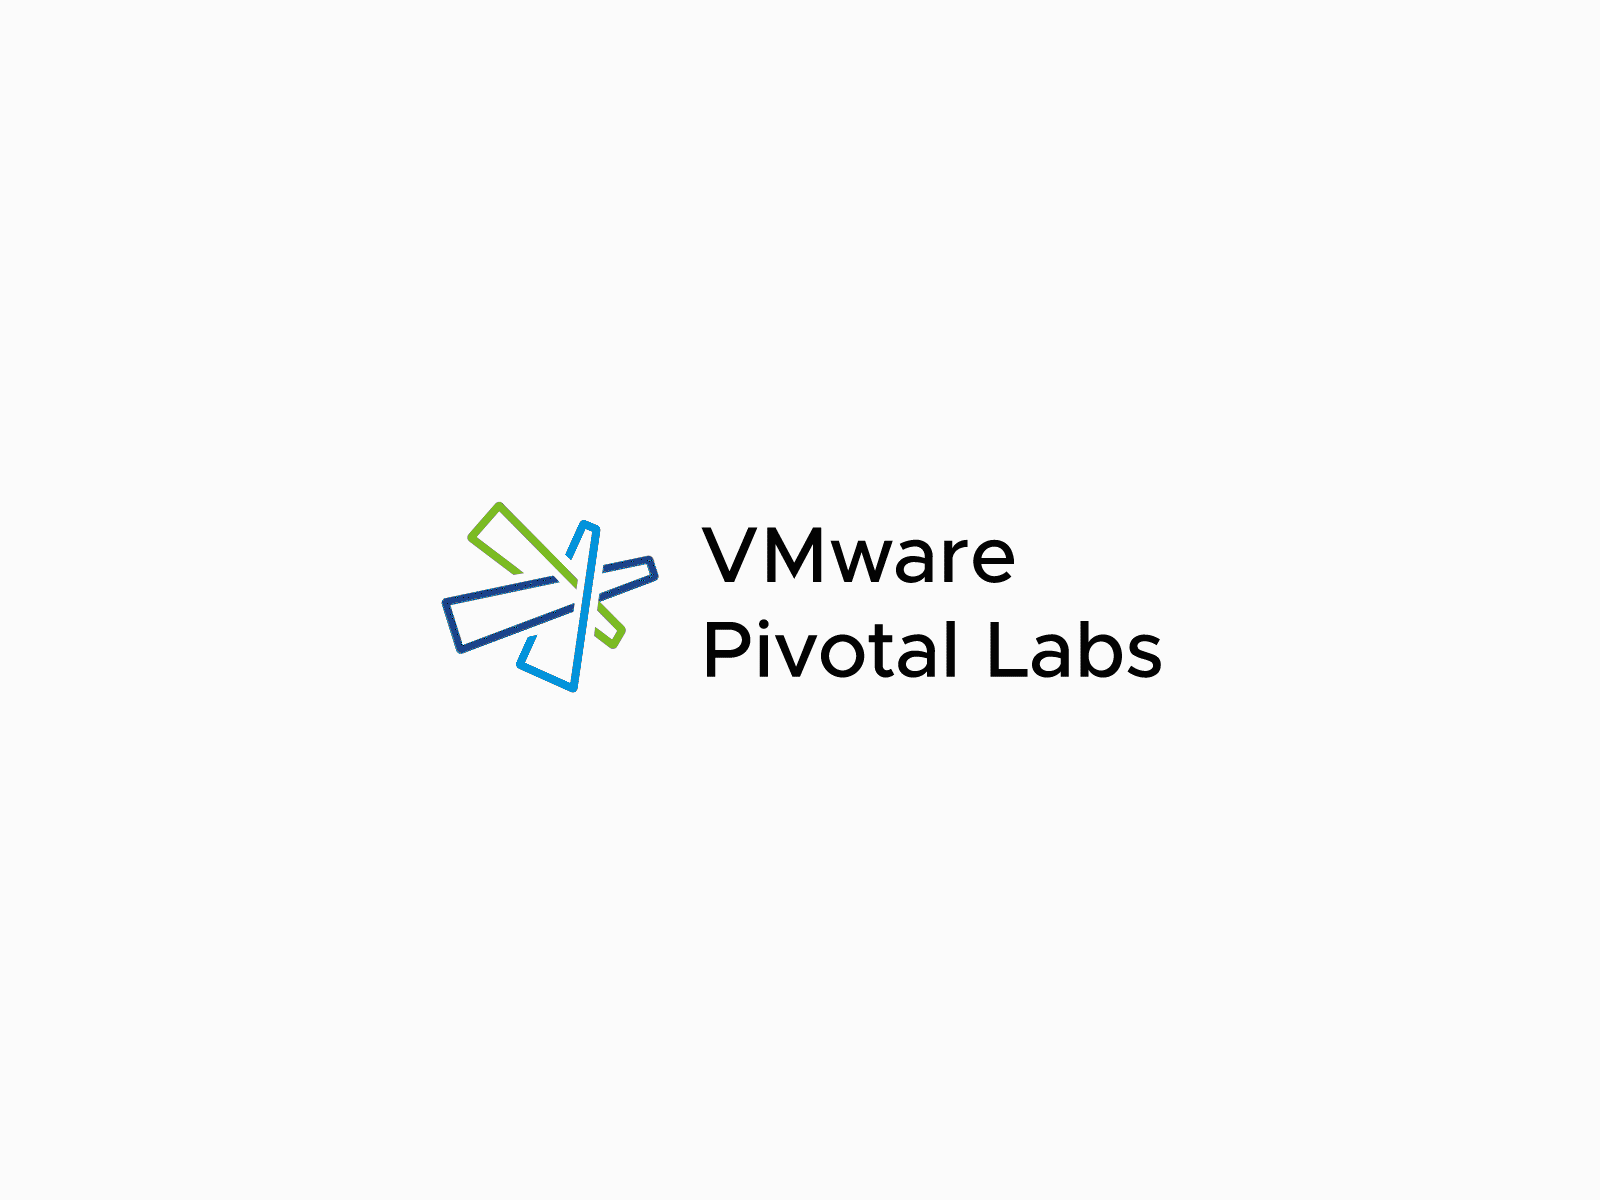 VMware Pivotal Labs logo animation